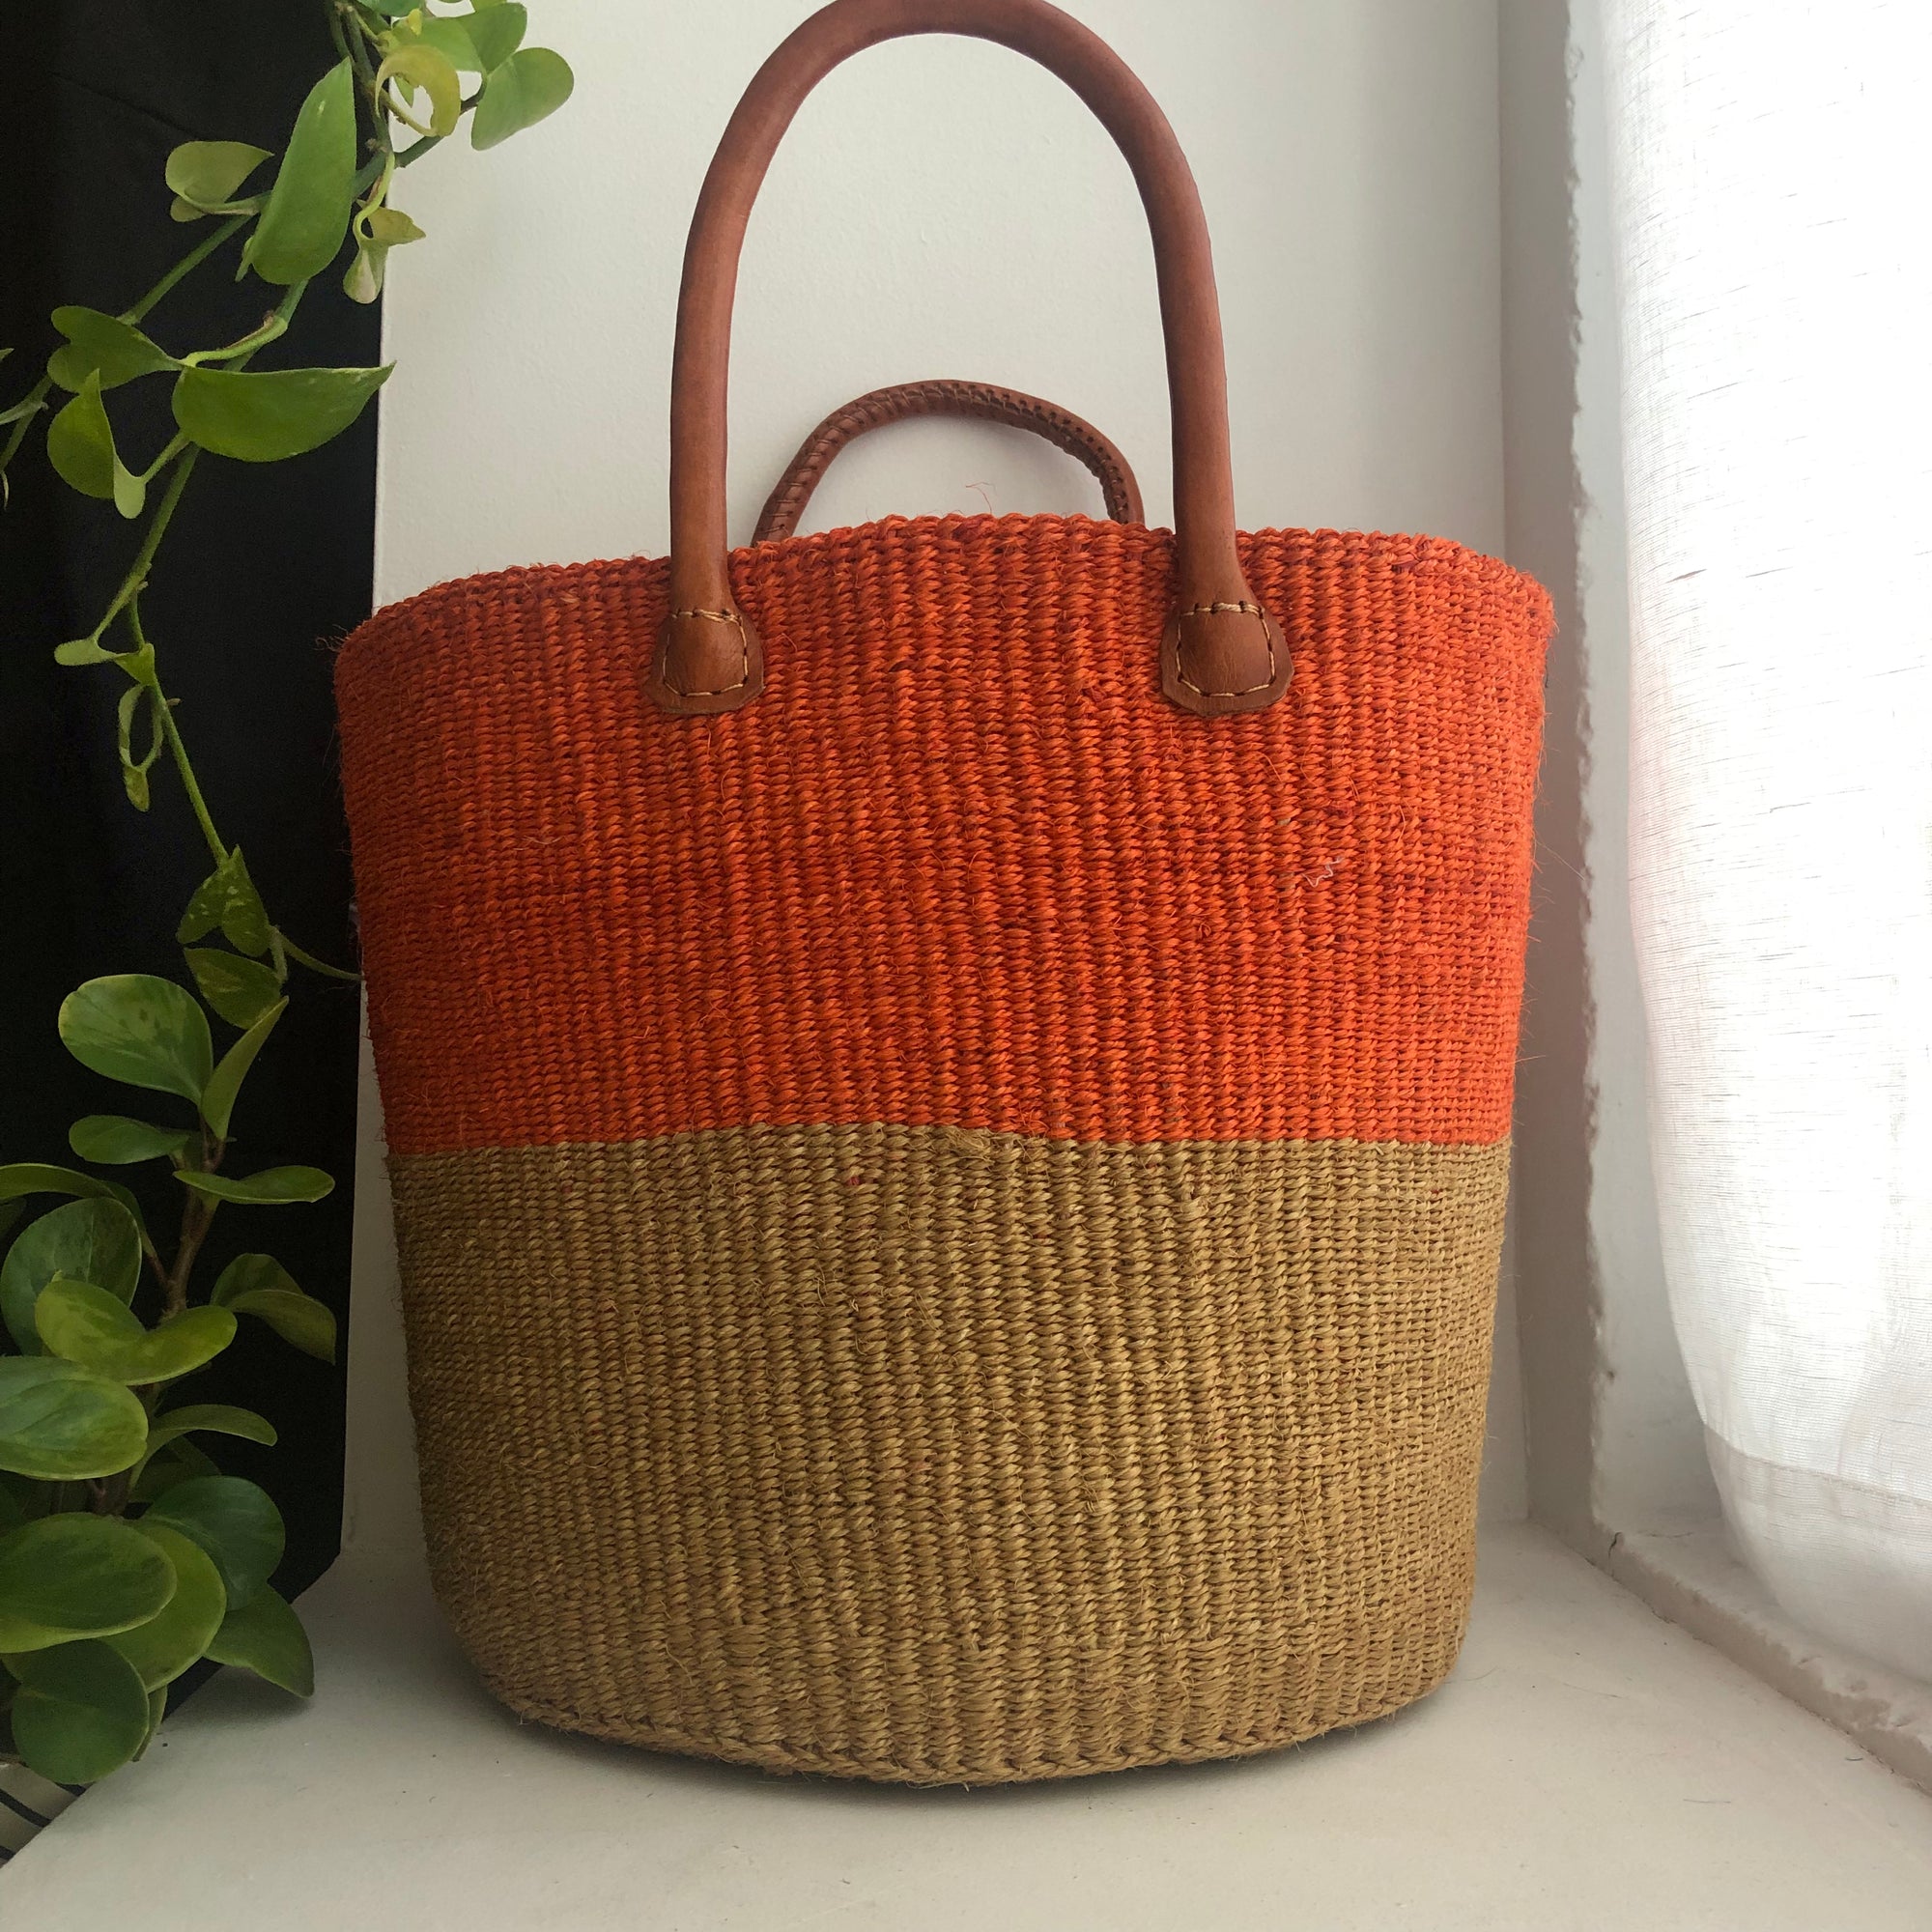 Orange basket with leather handles